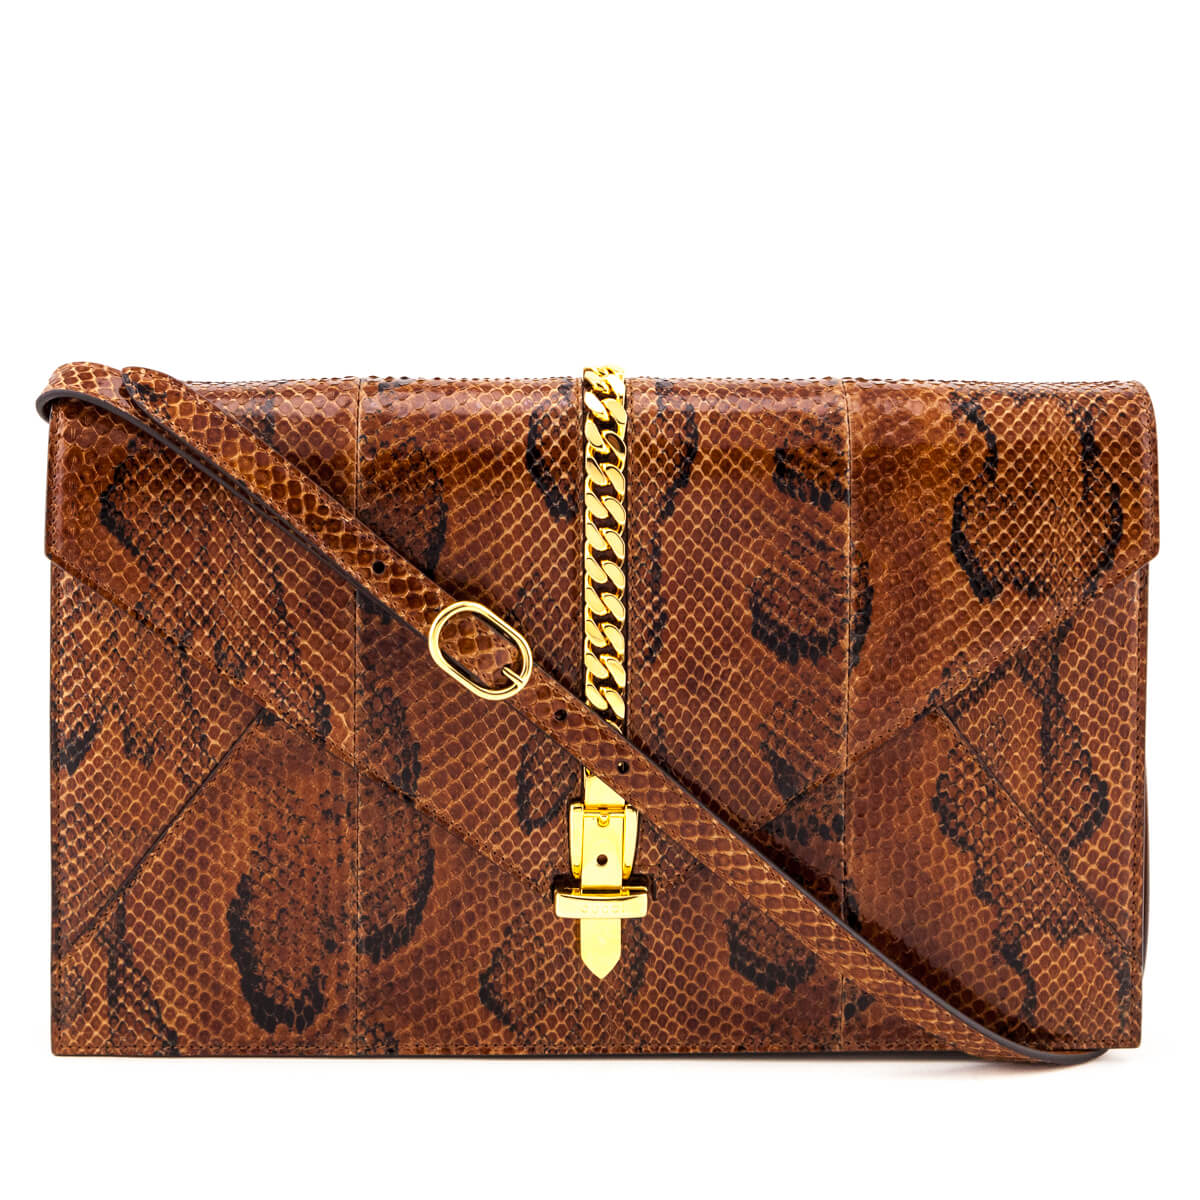 Gucci Brown Python Sylvie 1969 Shoulder Bag - Love that Bag etc - Preowned Authentic Designer Handbags & Preloved Fashions